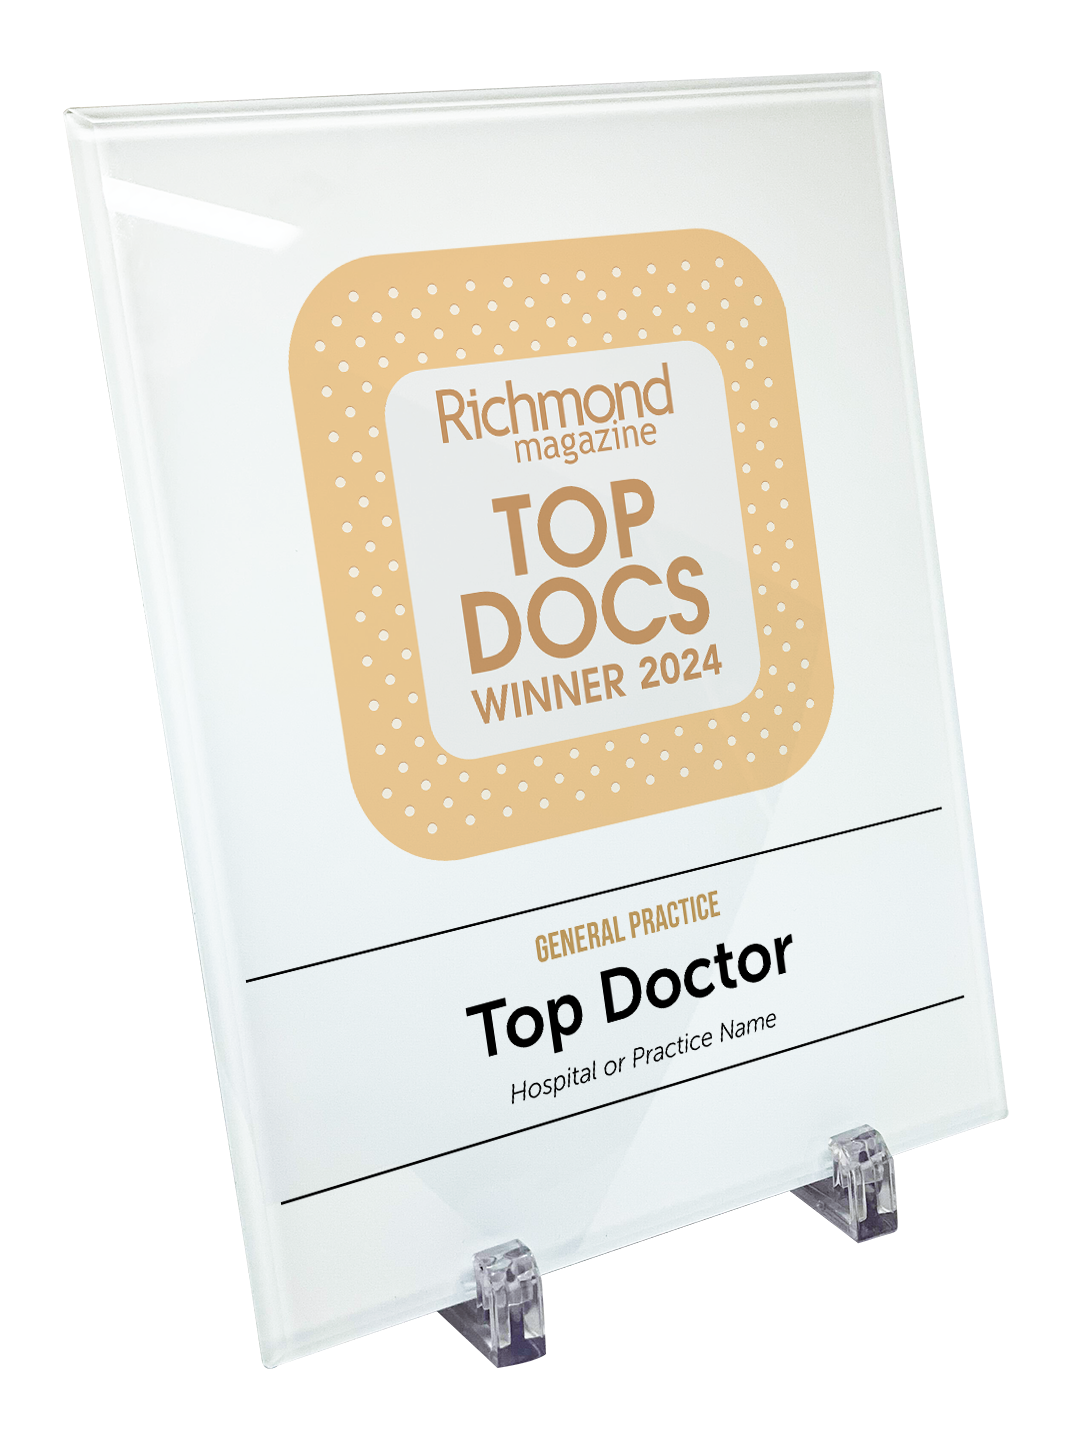 Richmond Magazine "Top Docs" Logo Award Glass Plaque